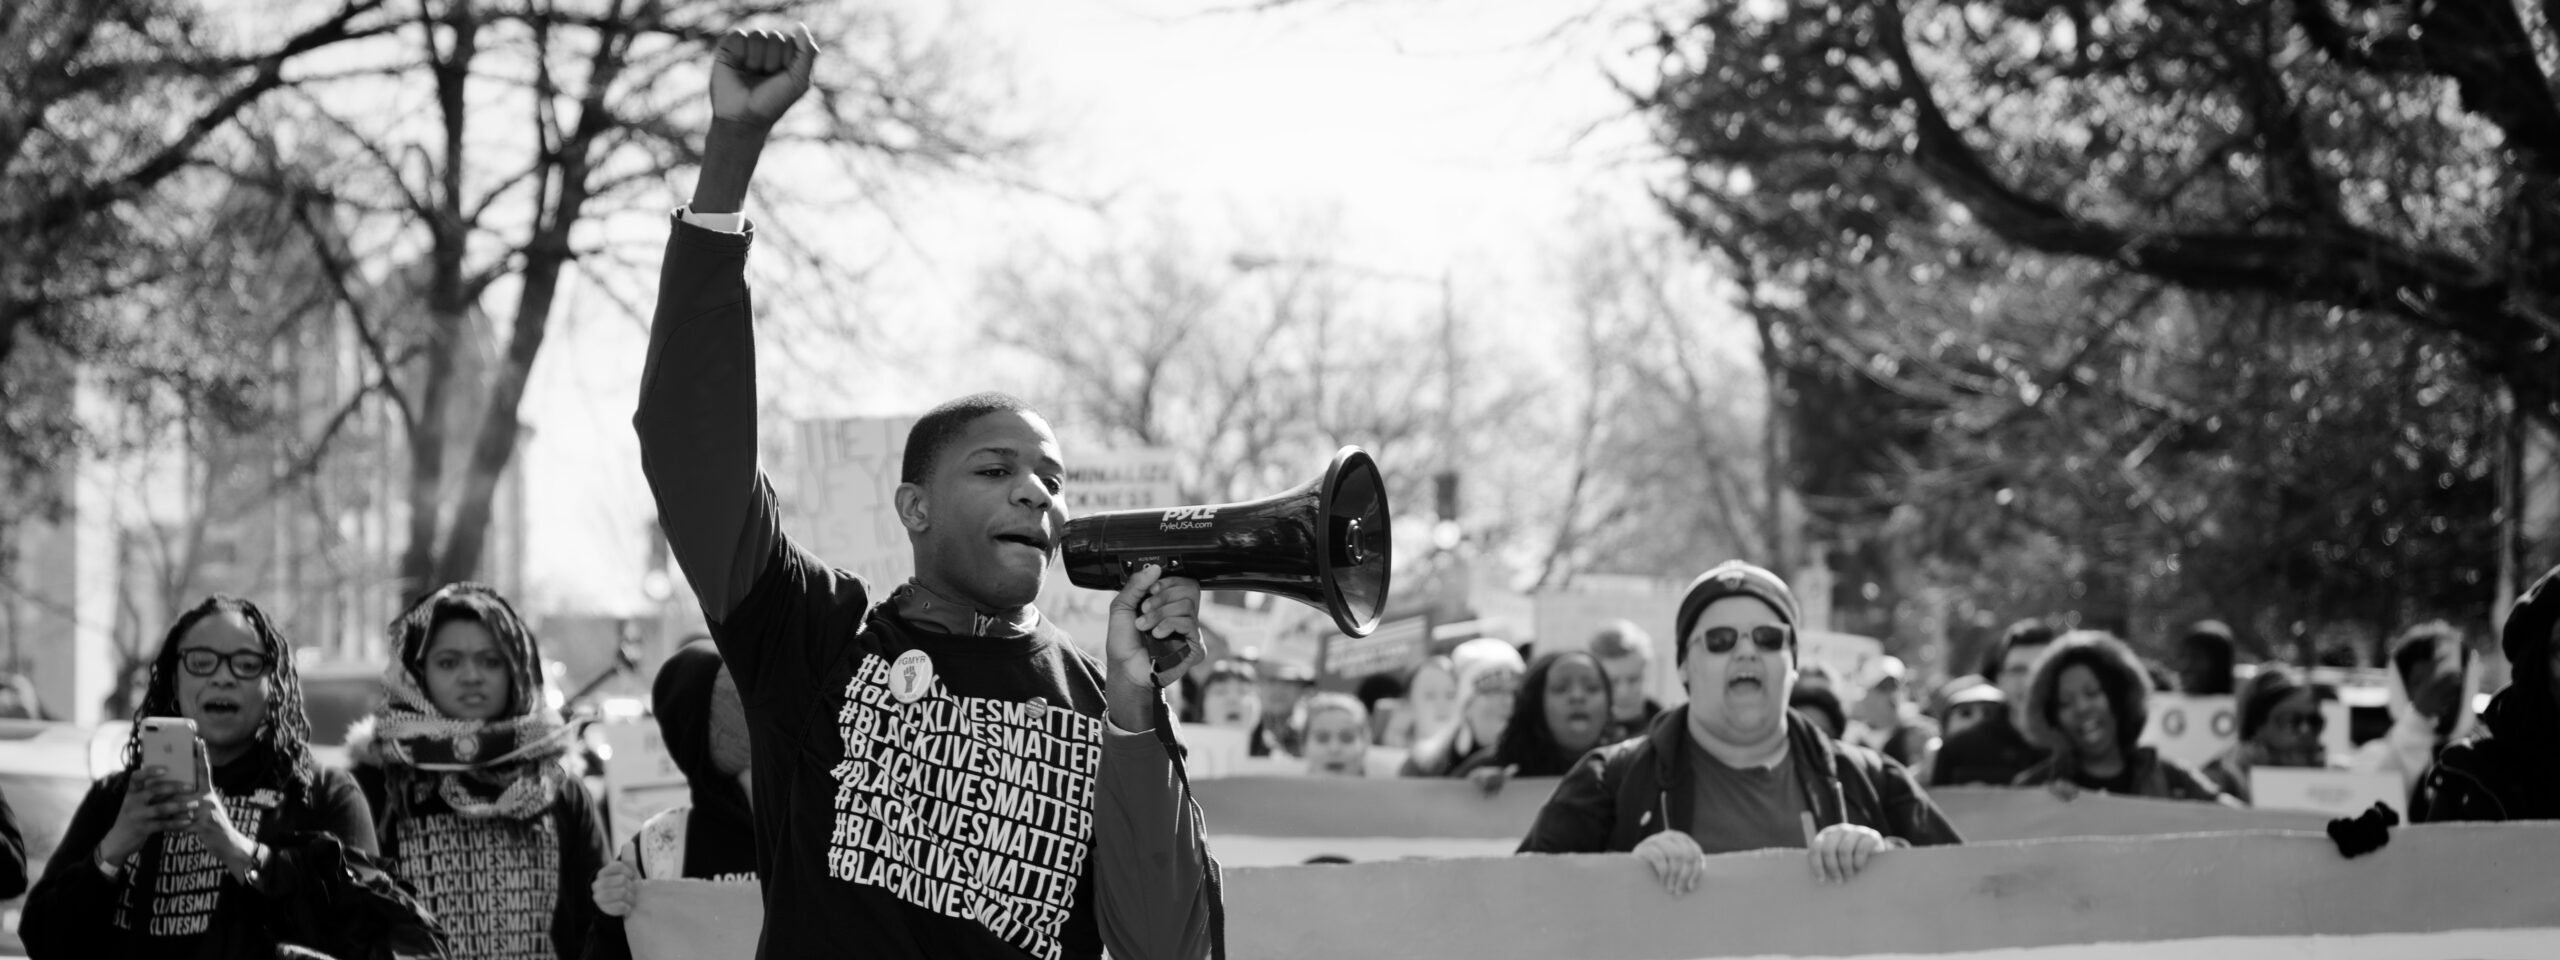 Black Lives Matter march in DC